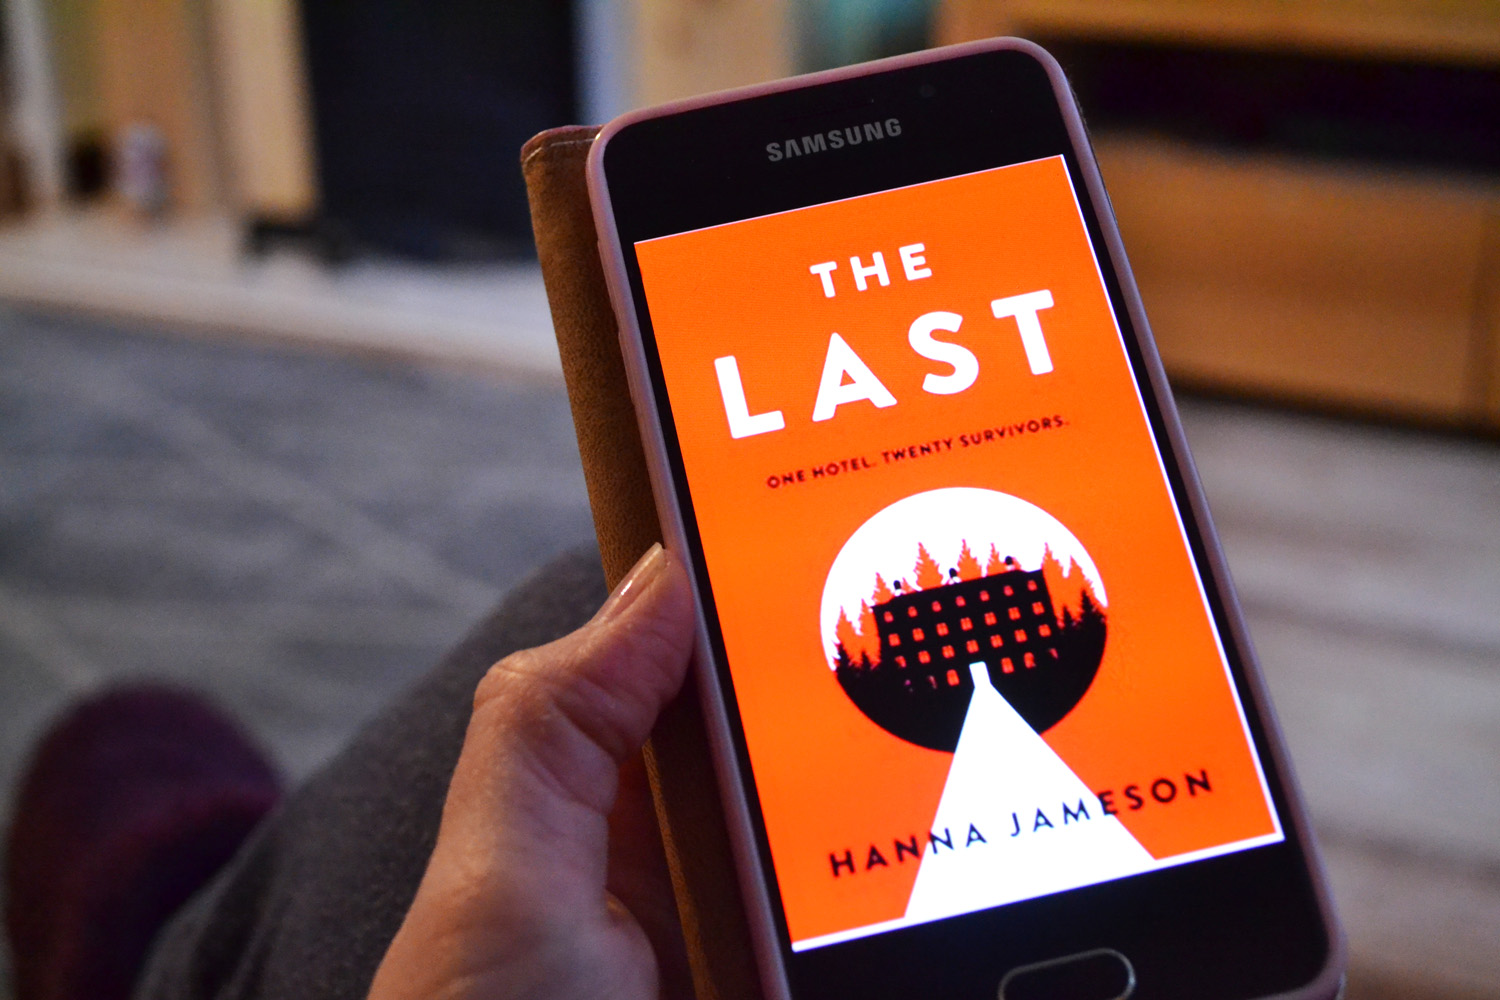 The Last by Hanna Jameson